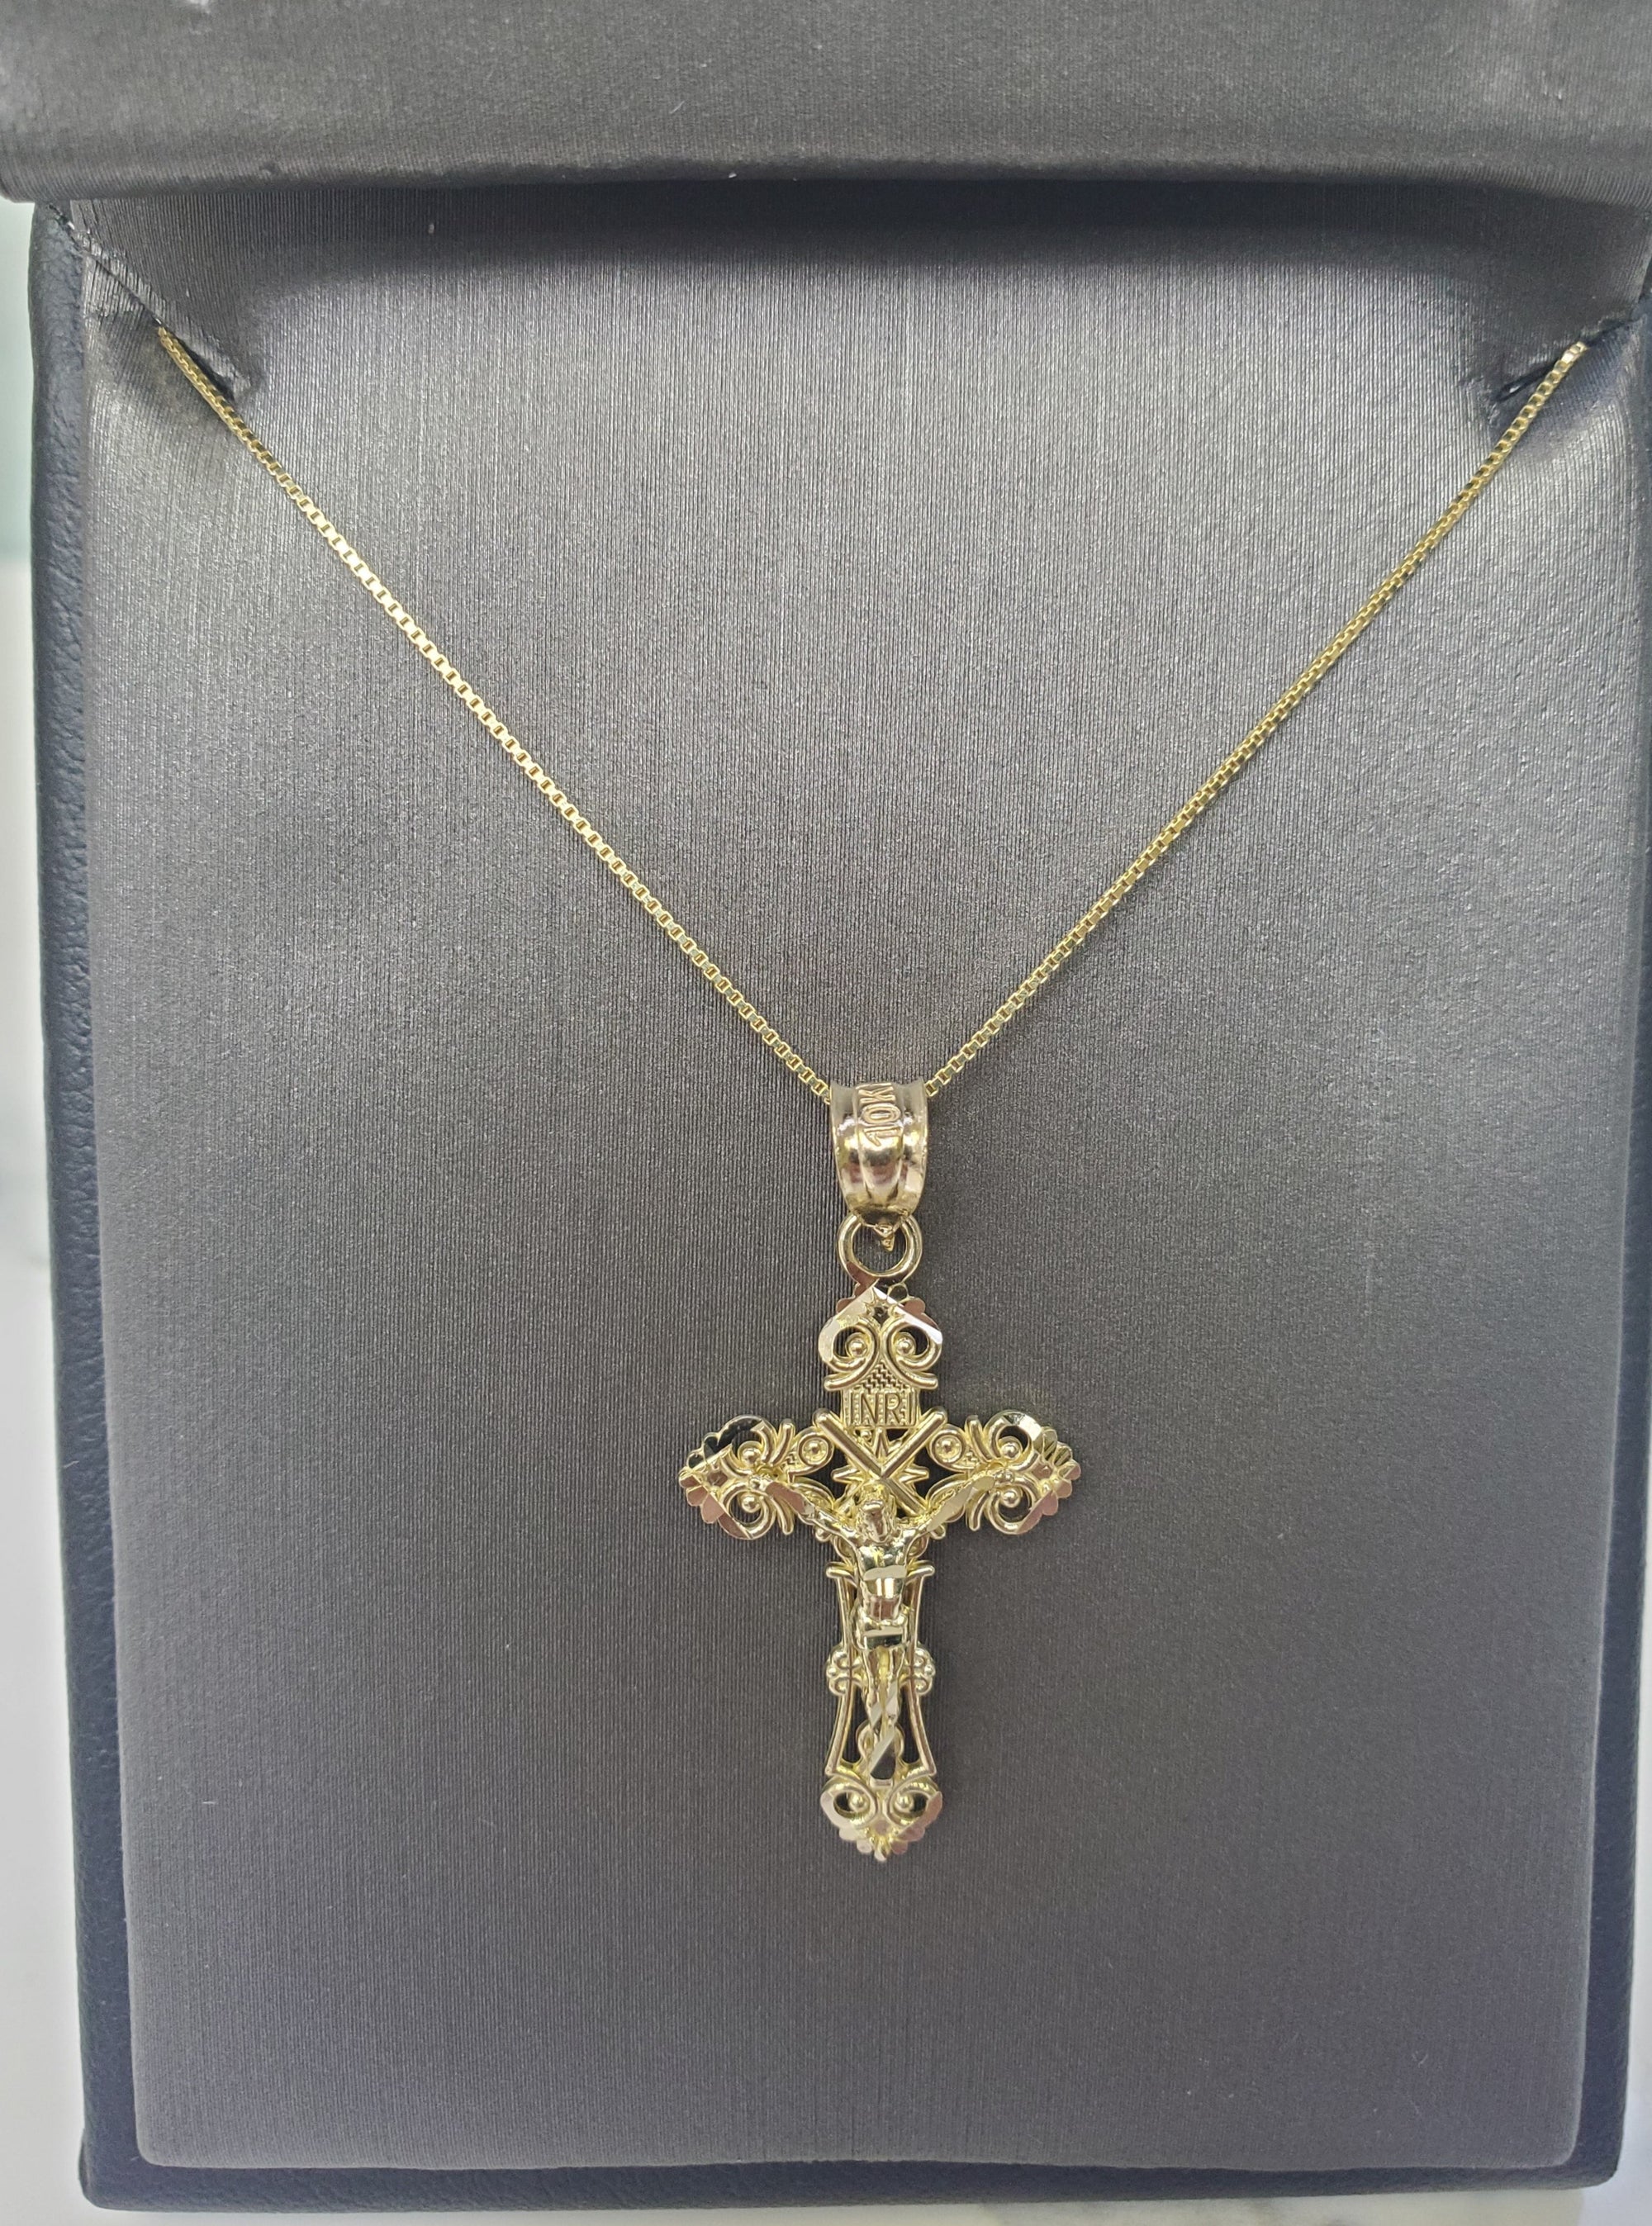 10K Gold Jesus Cross Pendant